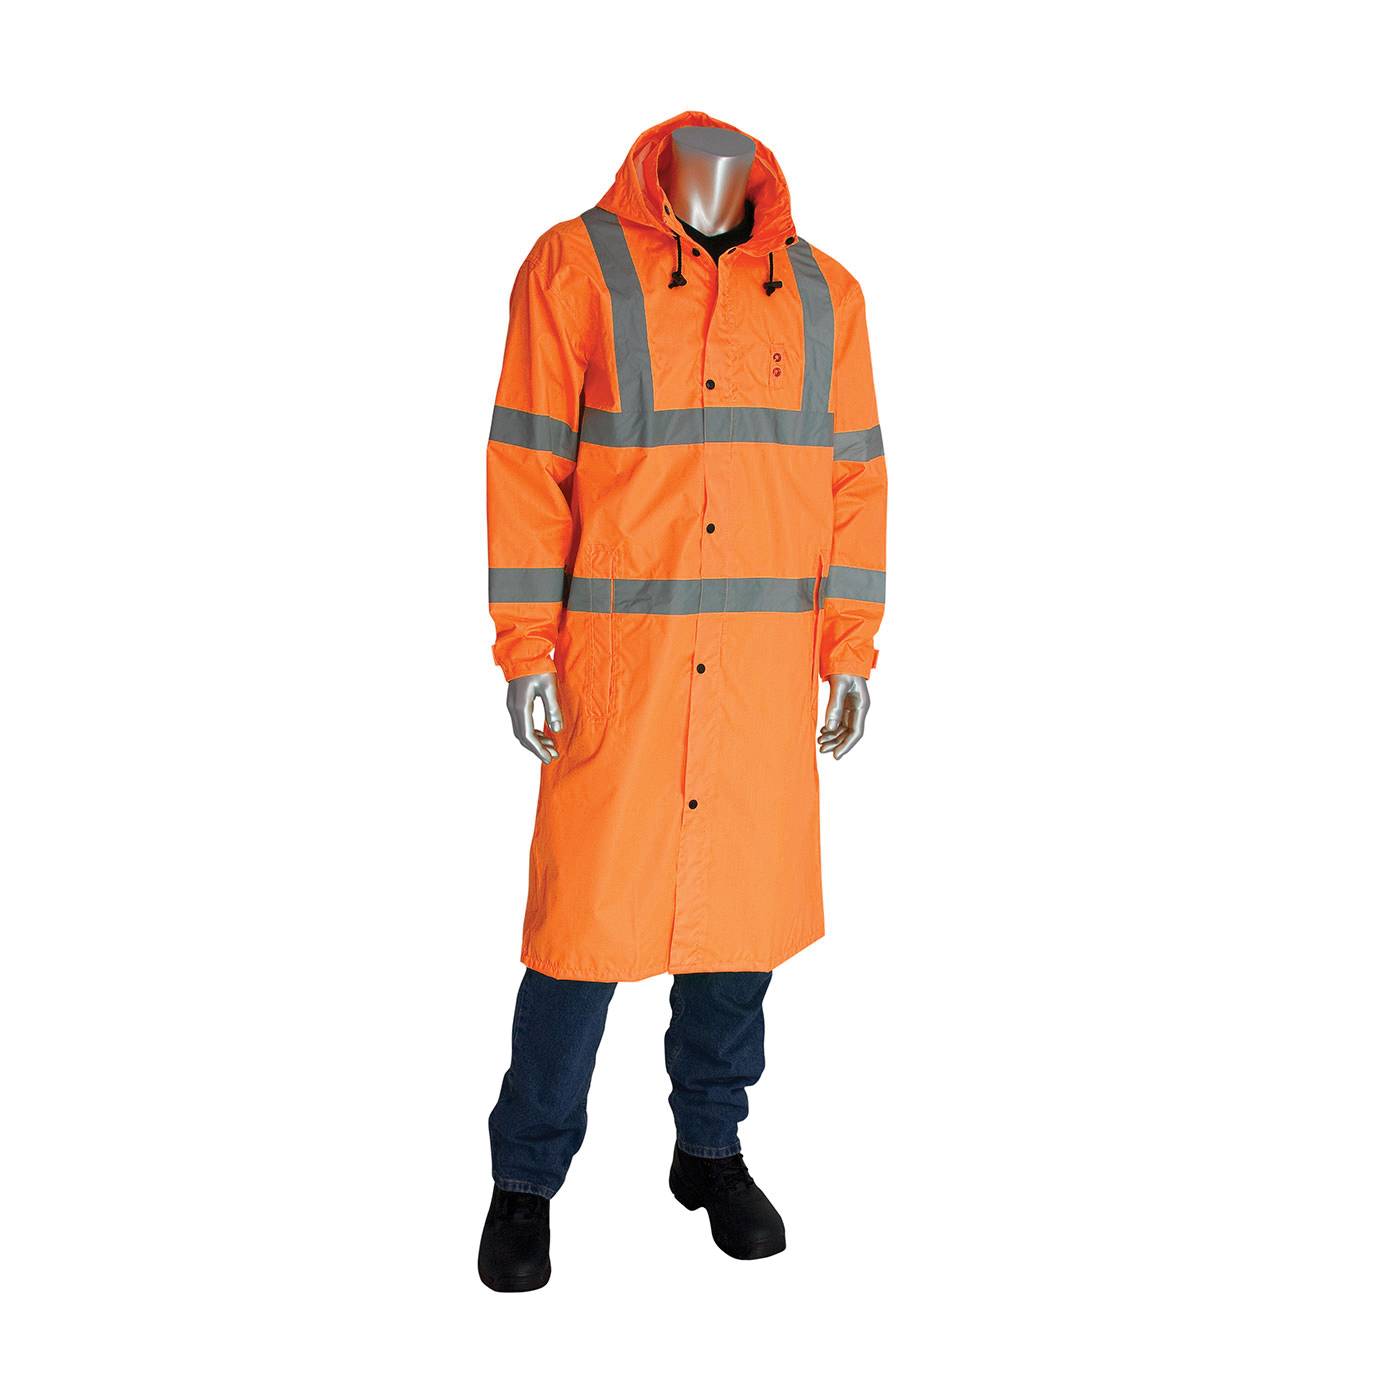 PIP® FALCON™ Viz™ 353-1048-OR/M All Purpose Waterproof Rain Coat, M, Hi-Viz Orange, 150D Polyester Coated with Polyurethane, Resists: Water, ANSI 107 Type R Class 3, Concealed Hood